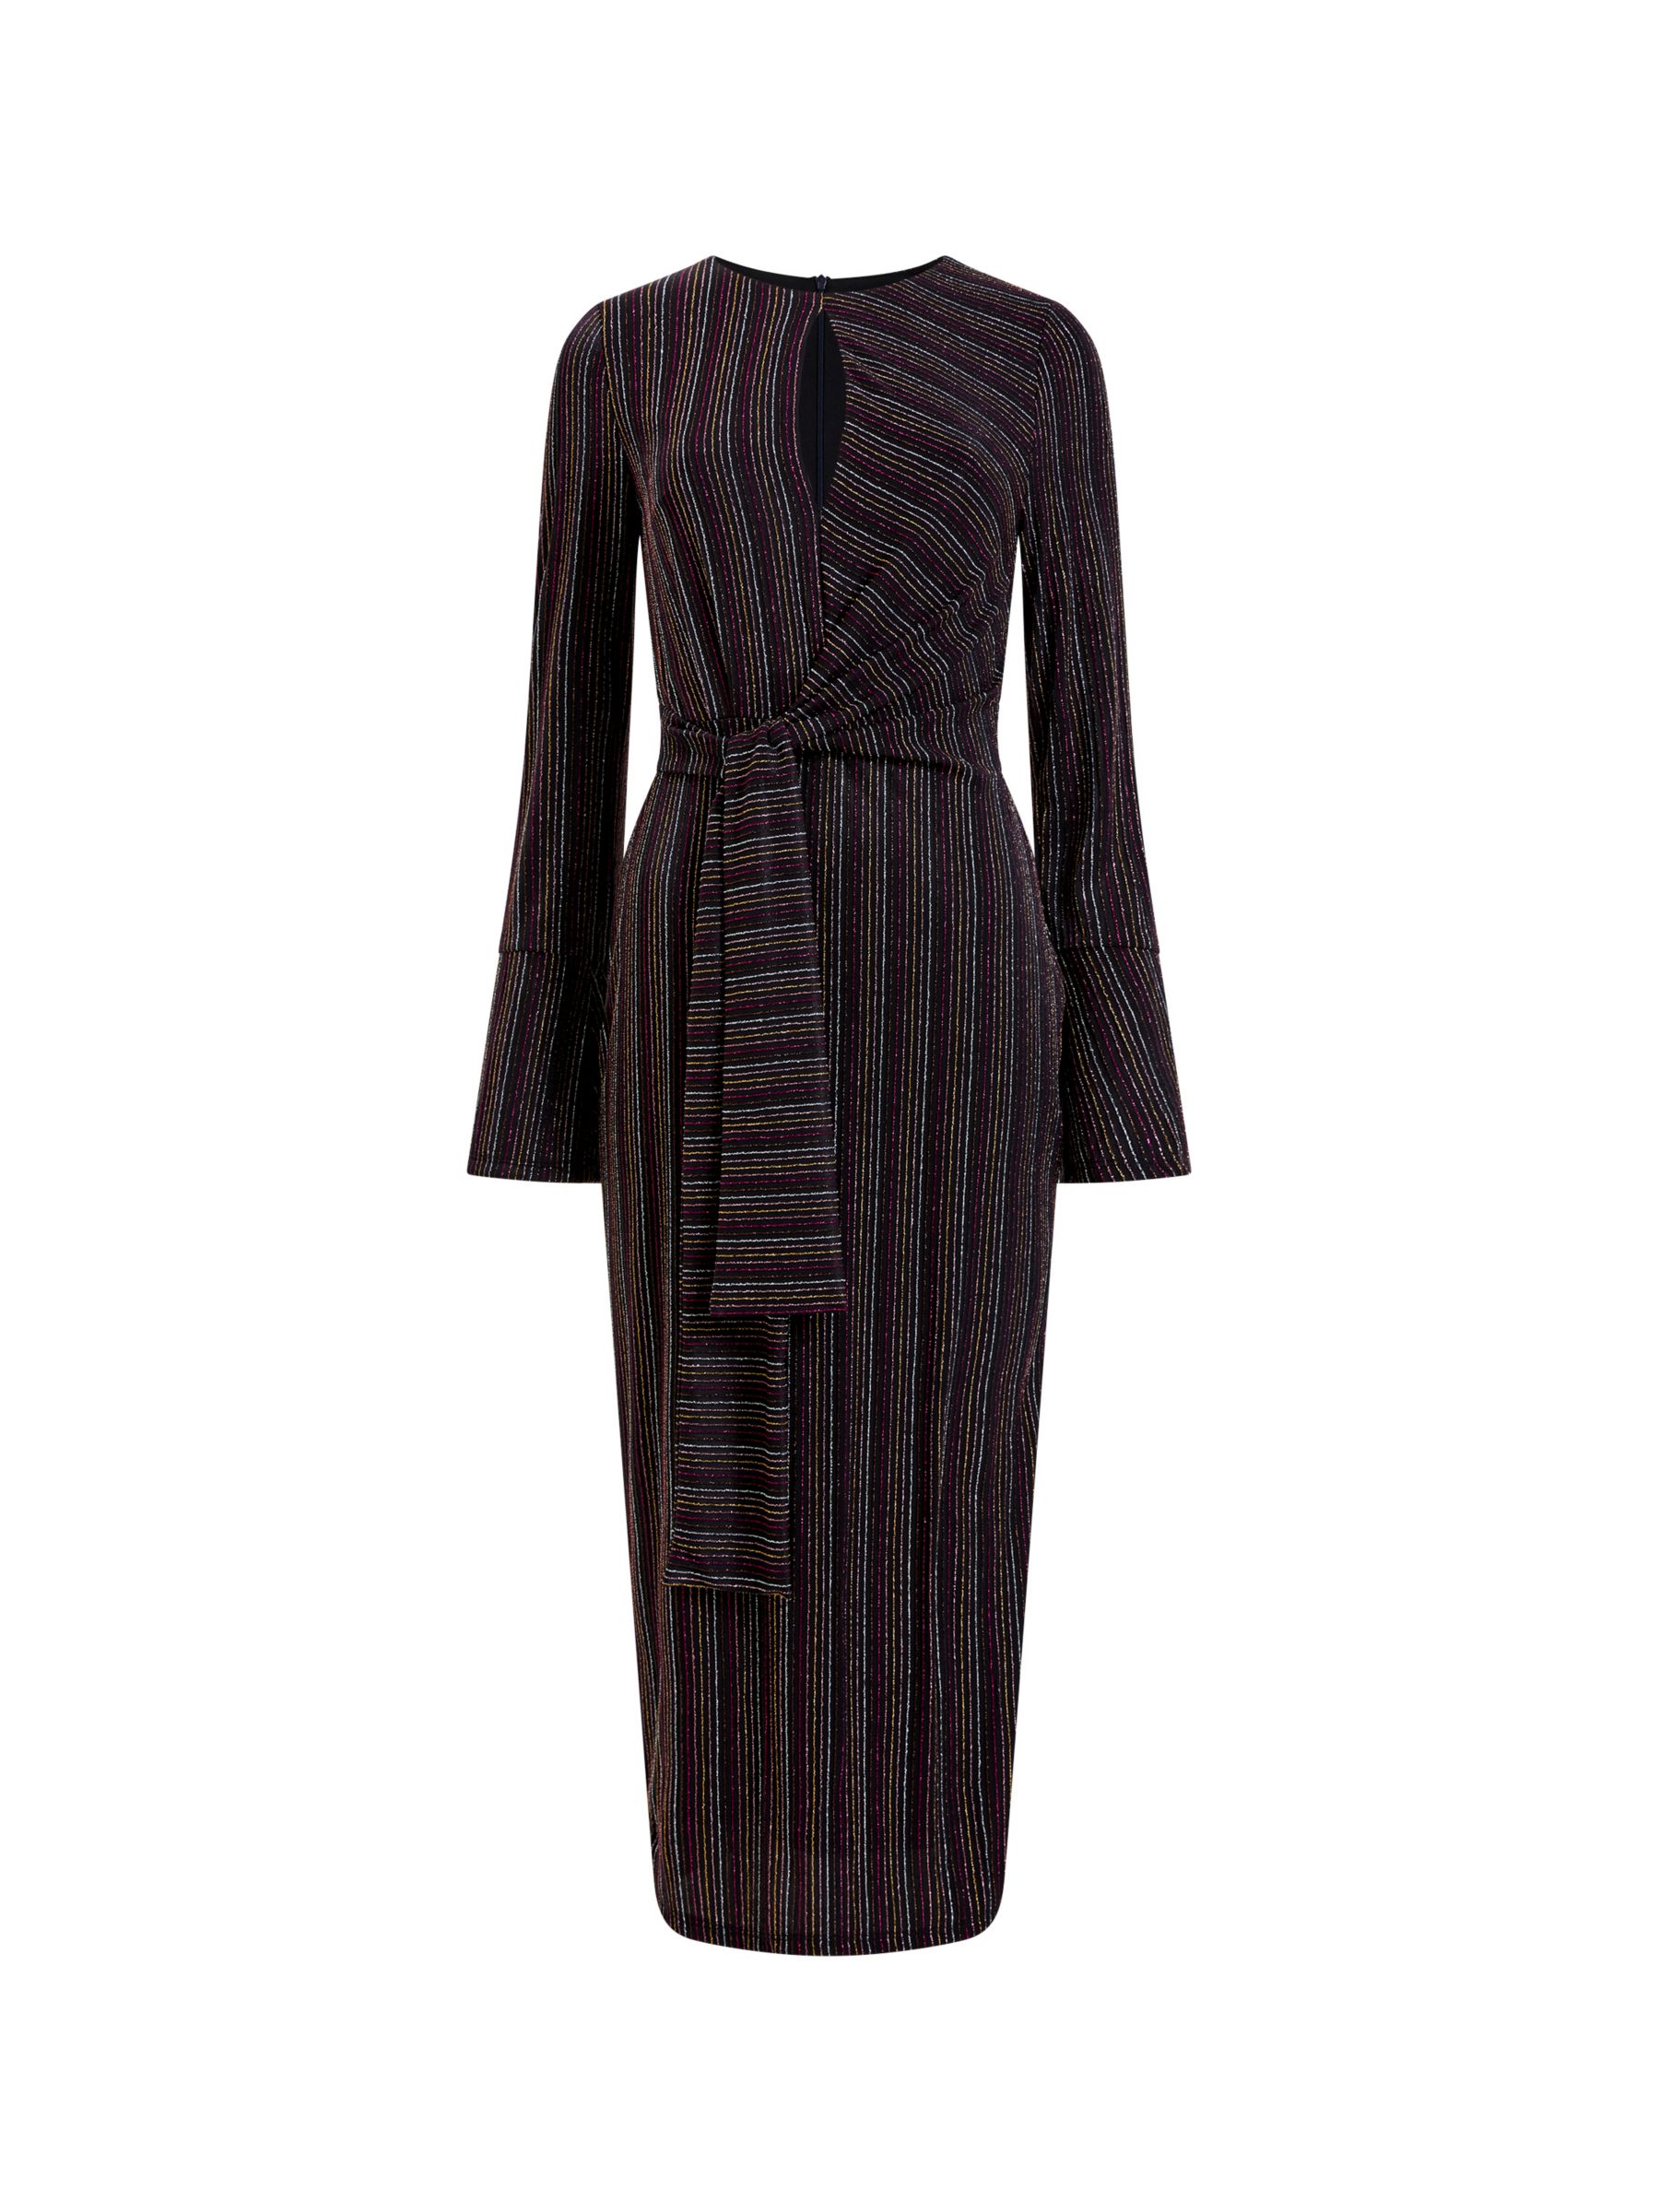 French Connection Paula Keyhole Midi Dress, Black at John Lewis & Partners